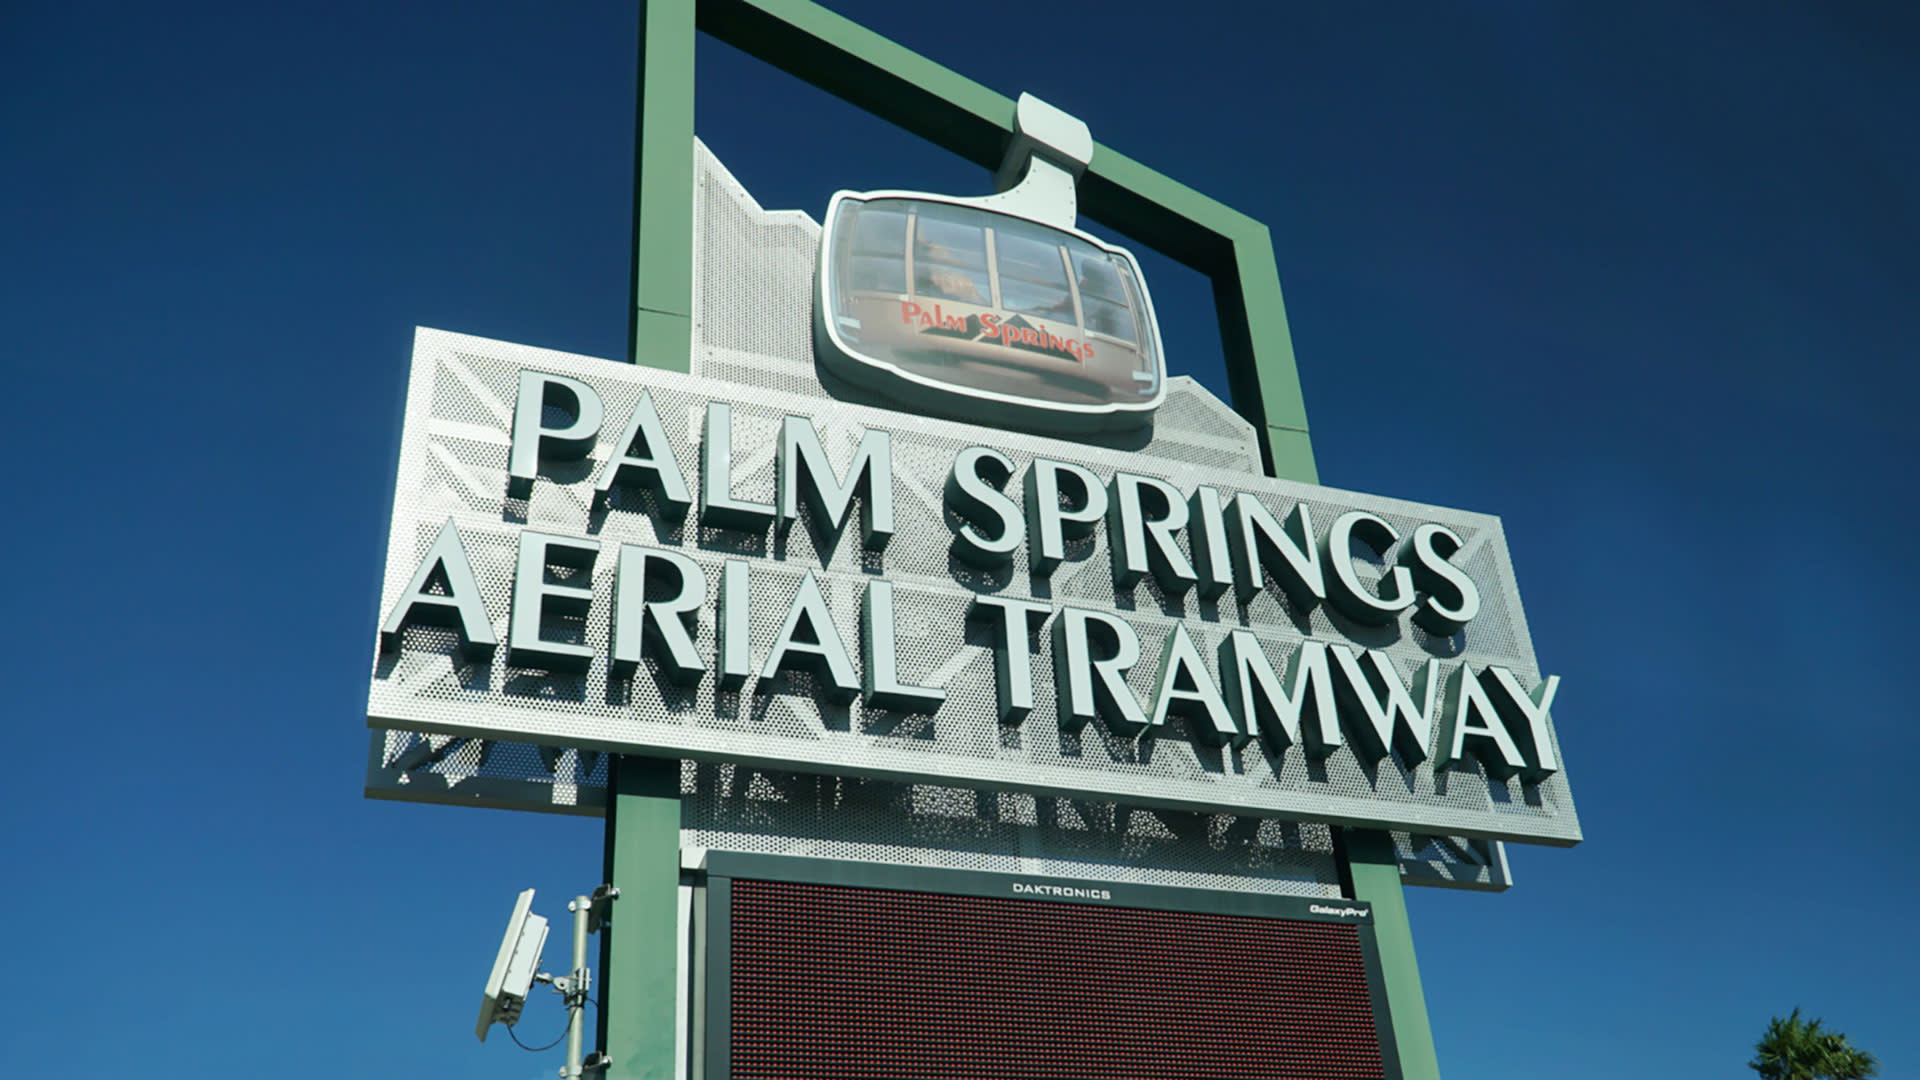 palm springs aerial tramway